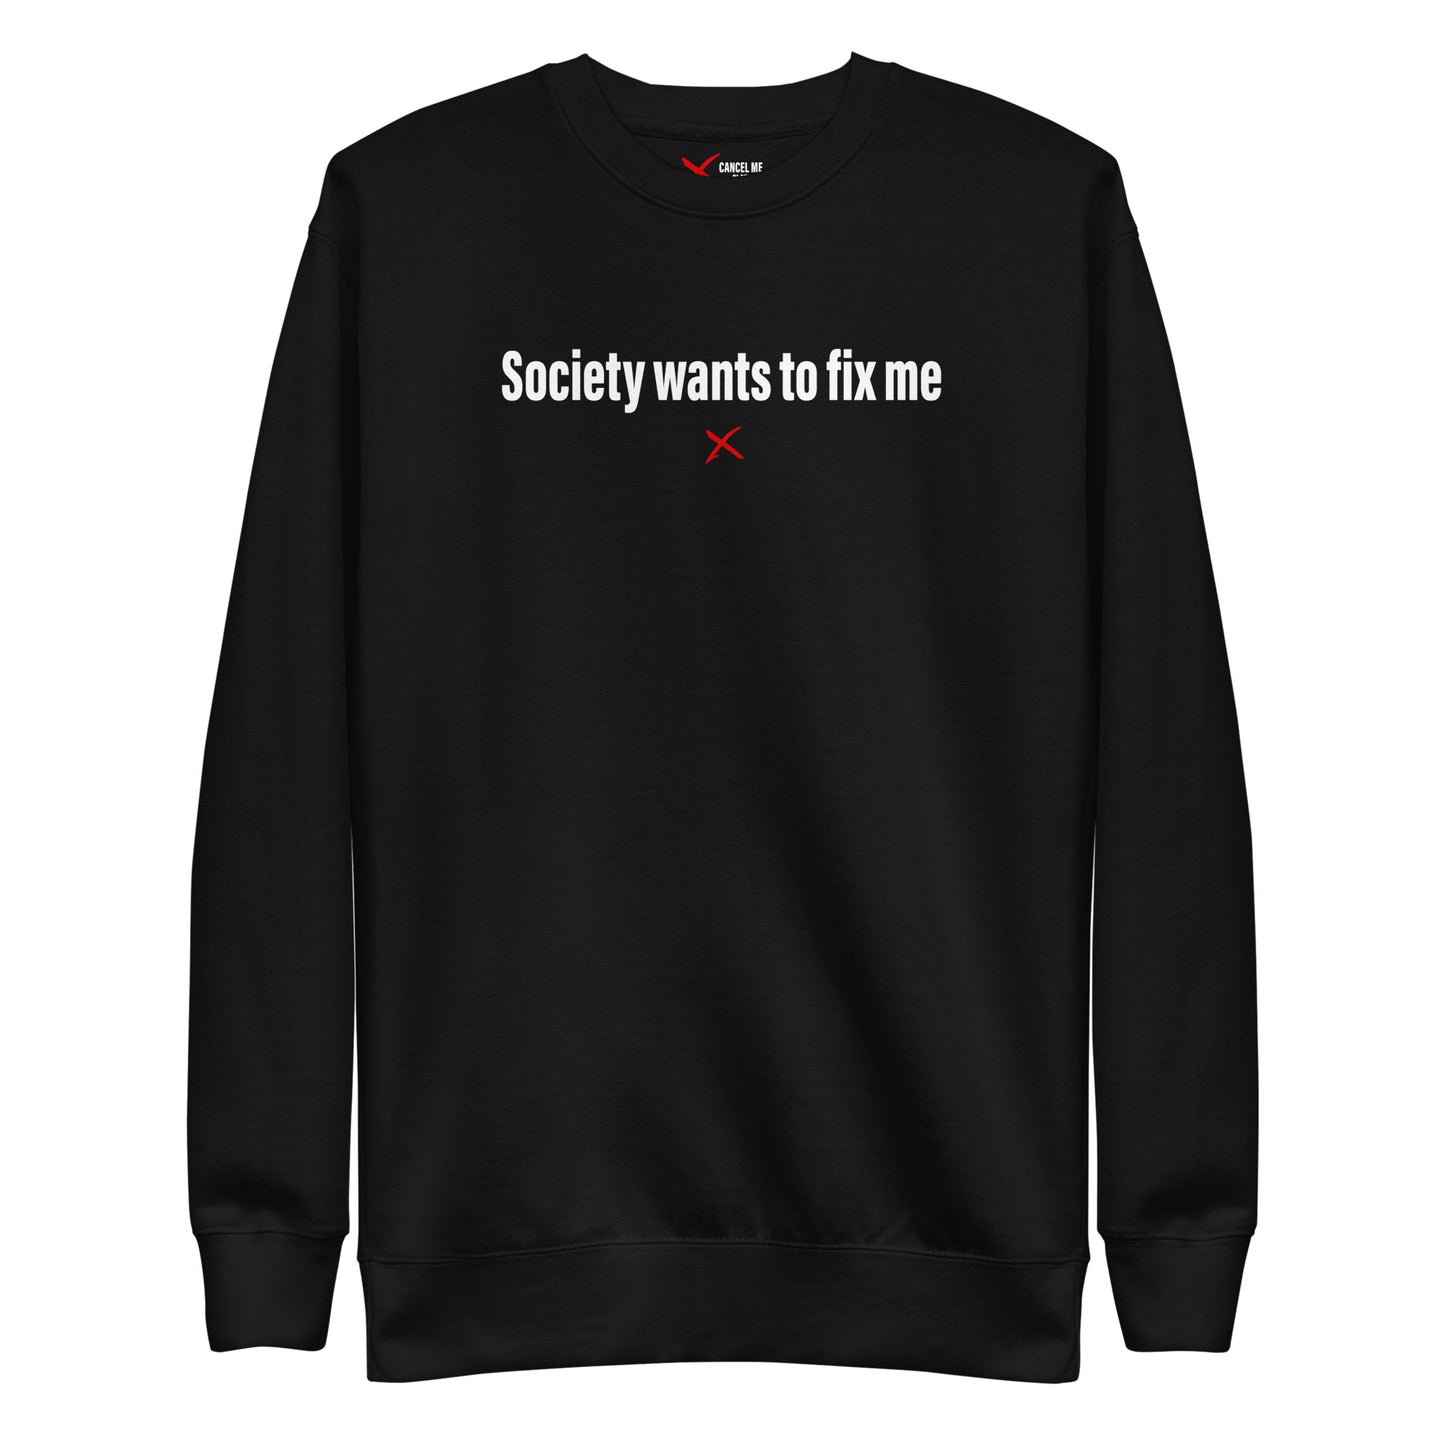 Society wants to fix me - Sweatshirt